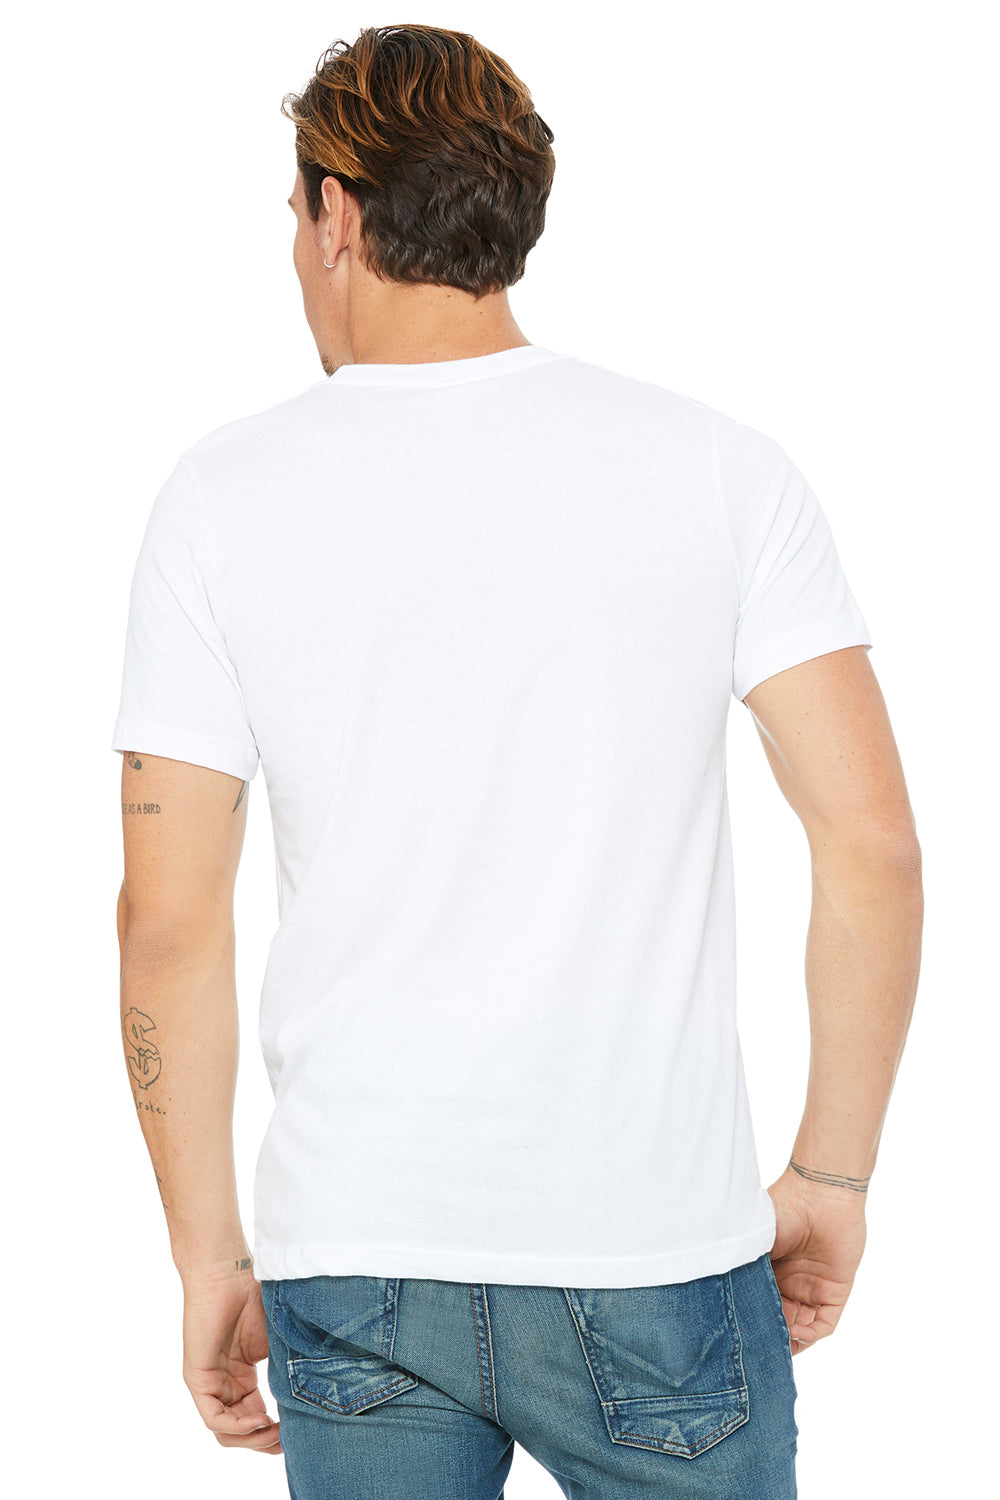 Bella + Canvas 3021 Mens Jersey Short Sleeve Crewneck T-Shirt w/ Pocket White Model Back